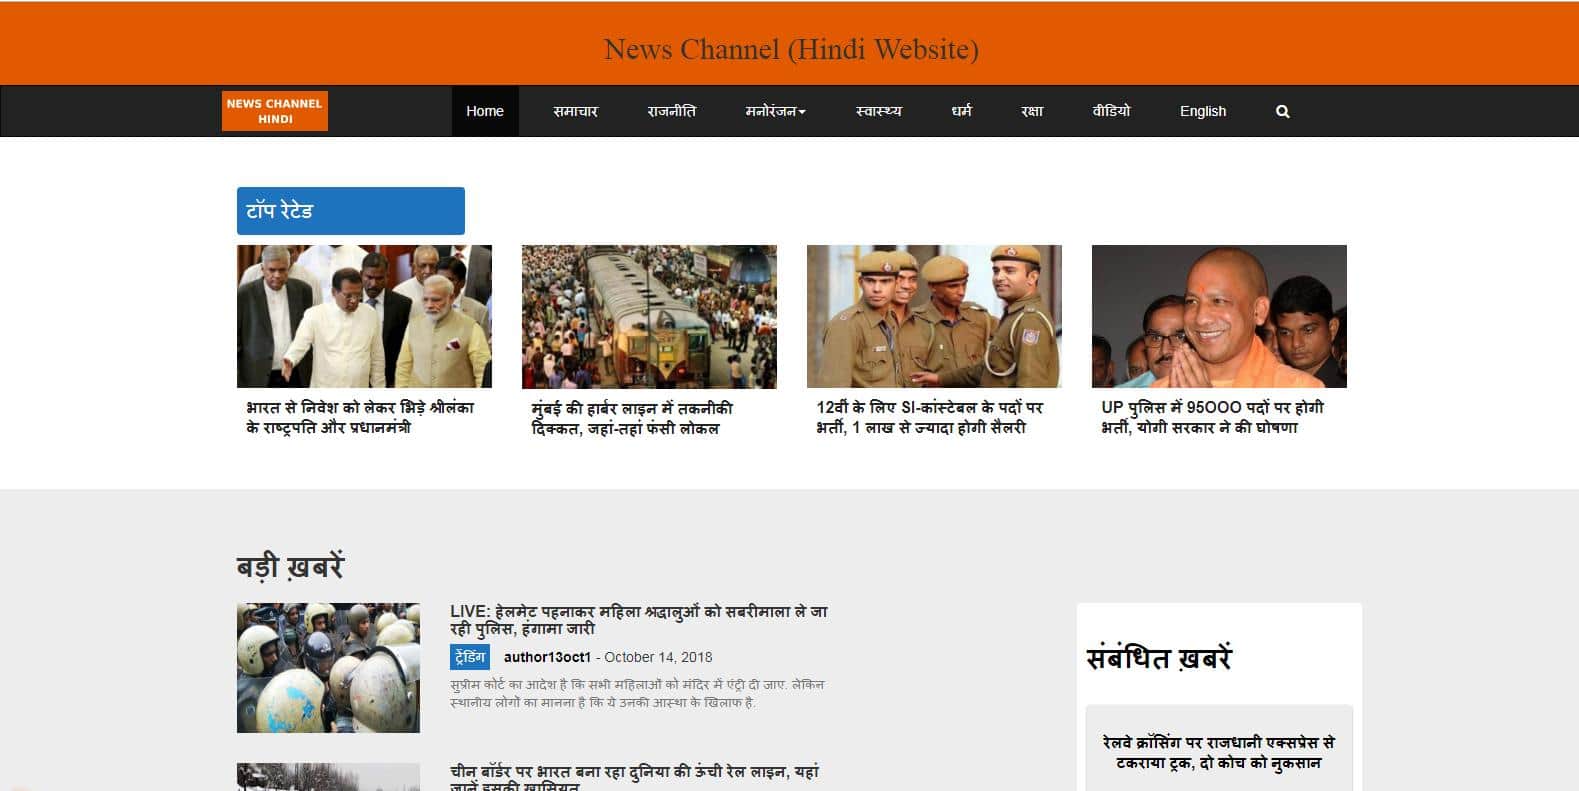 News channel - Hindi Website